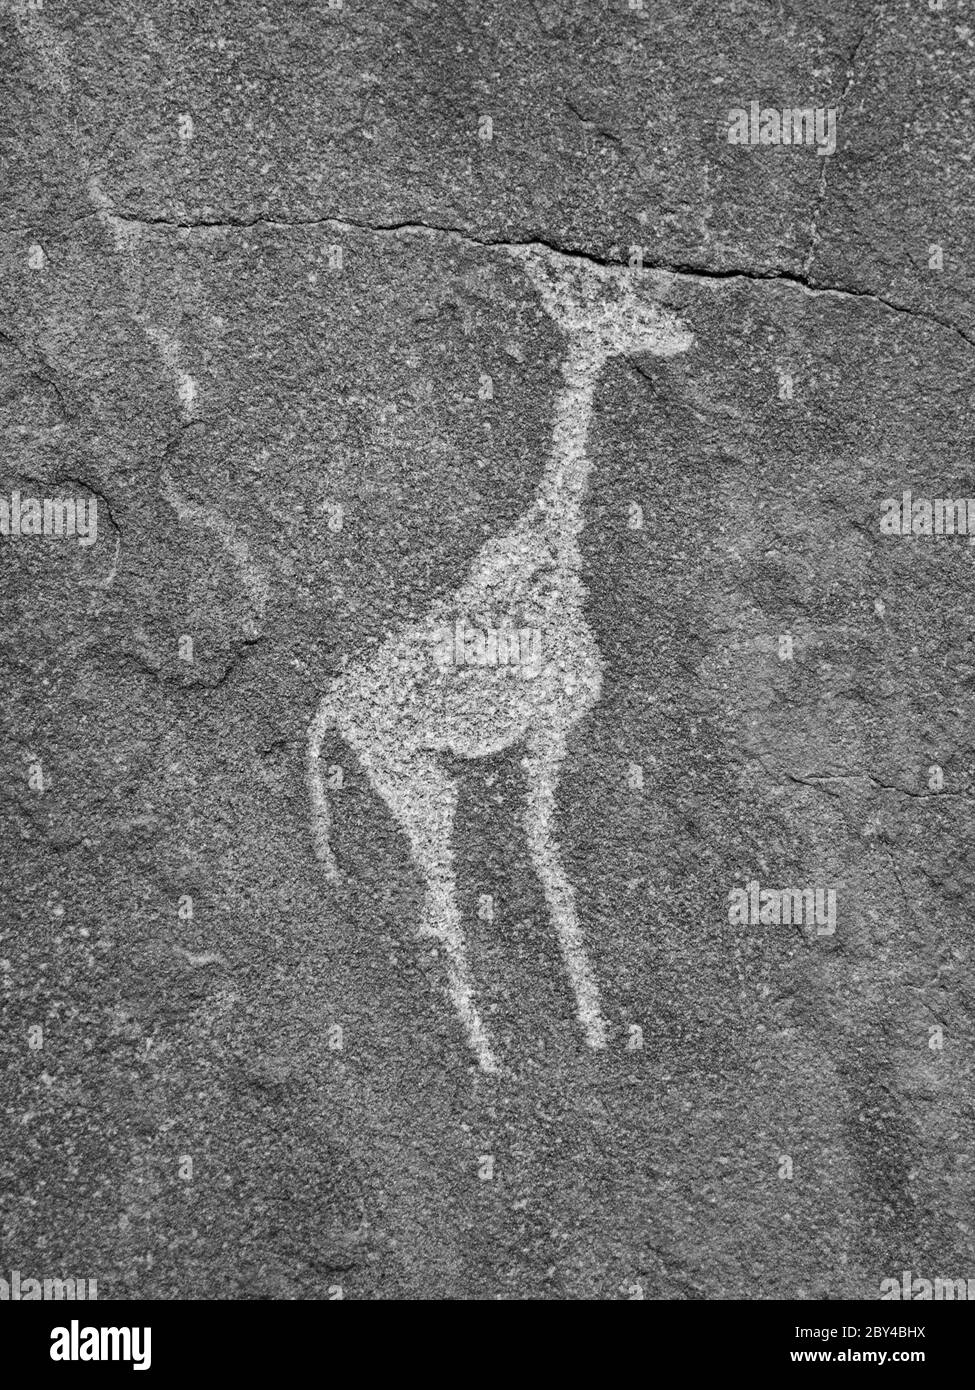 Bushman prehistoric rock engraving - Giraffe, Twyfelfontein, Namibia. Black and white image. Stock Photo